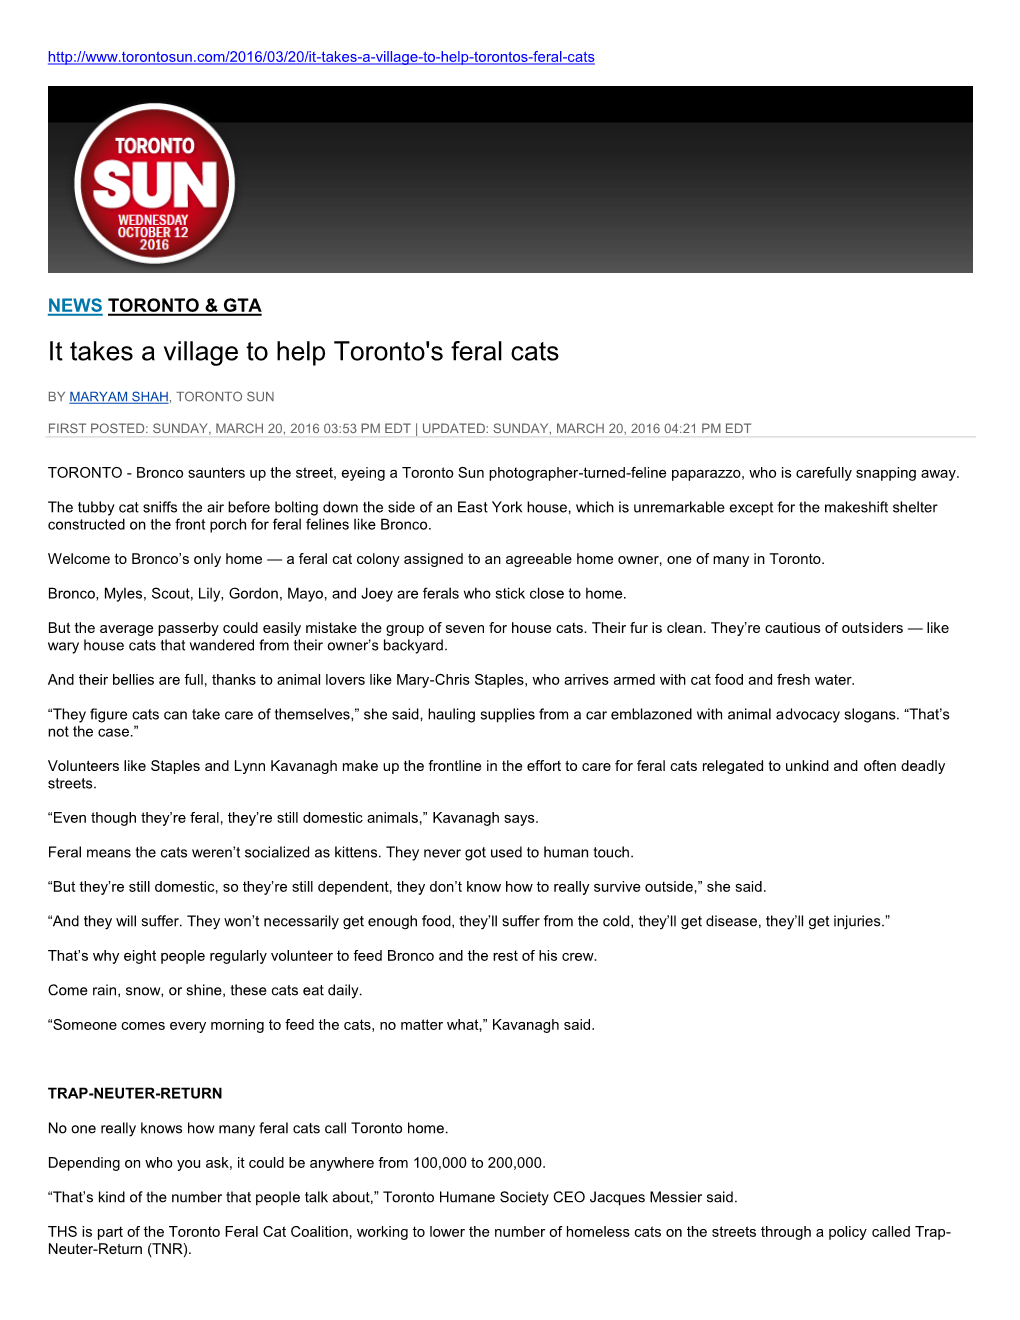 Toronto Sun – It Takes a Village to Help Toronto's Feral Cats